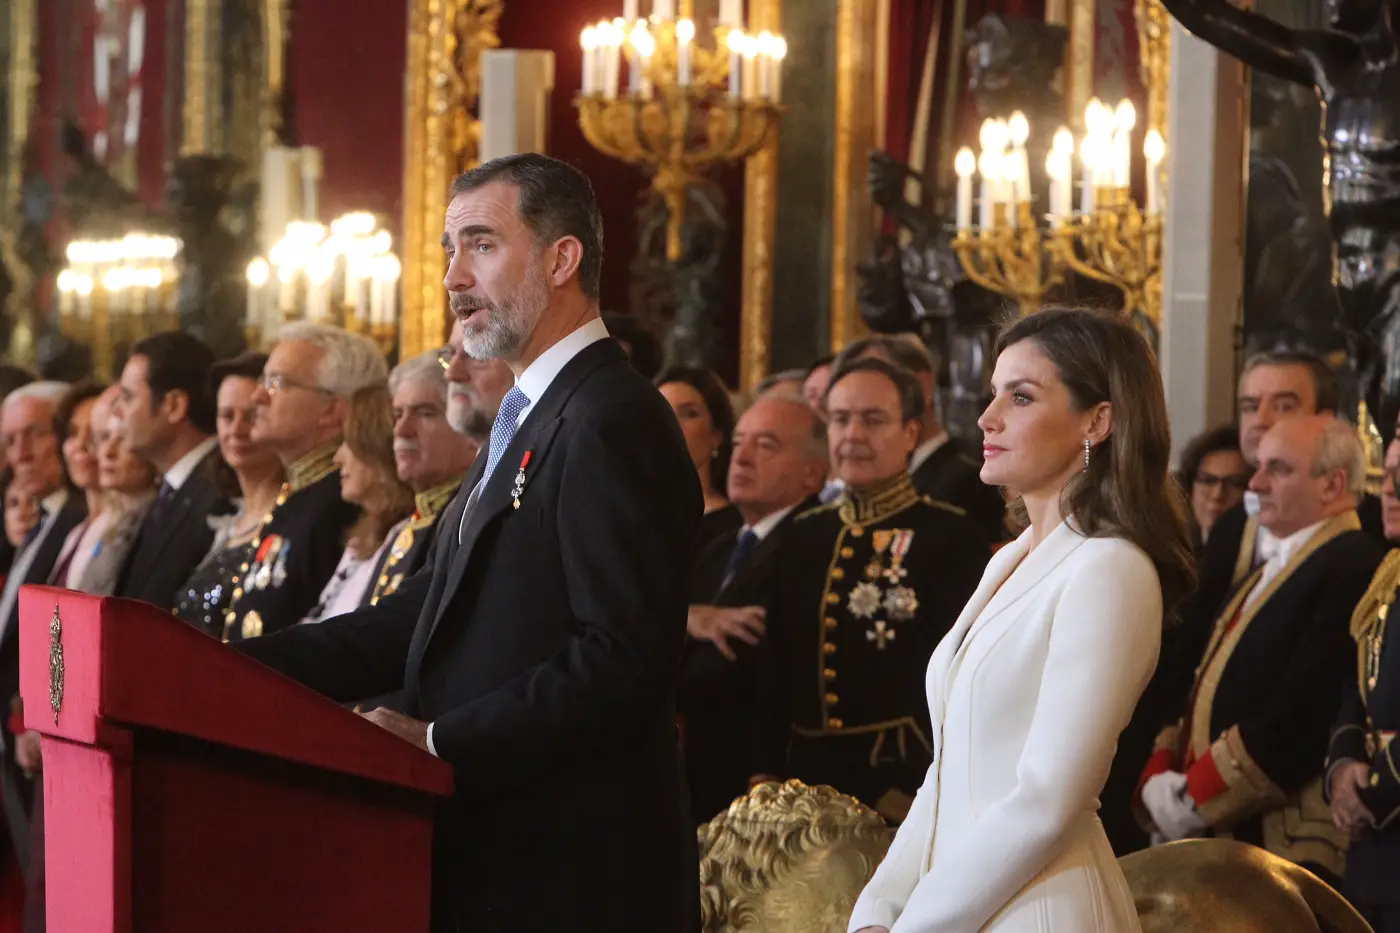 Queen Letizia in monochrome Regal Attire for Diplomatic Corps Reception at Palace